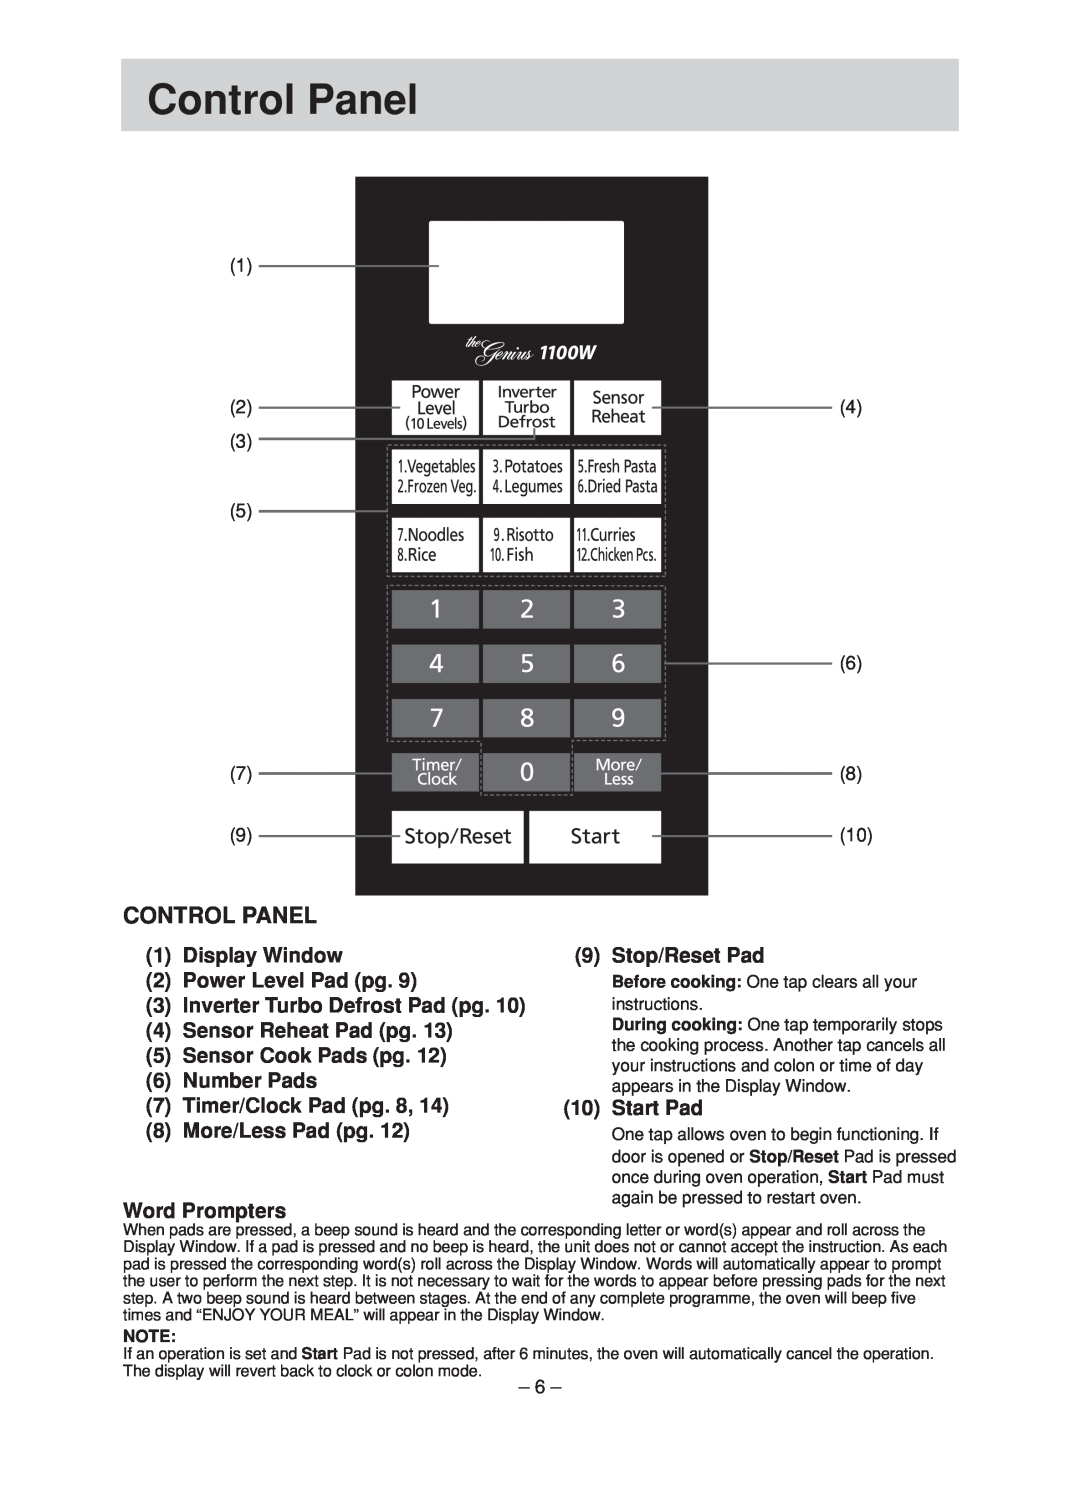 Panasonic NN-ST780S Control Panel, Display Window 2 Power Level Pad pg 3 Inverter Turbo Defrost Pad pg, Stop/Reset Pad 